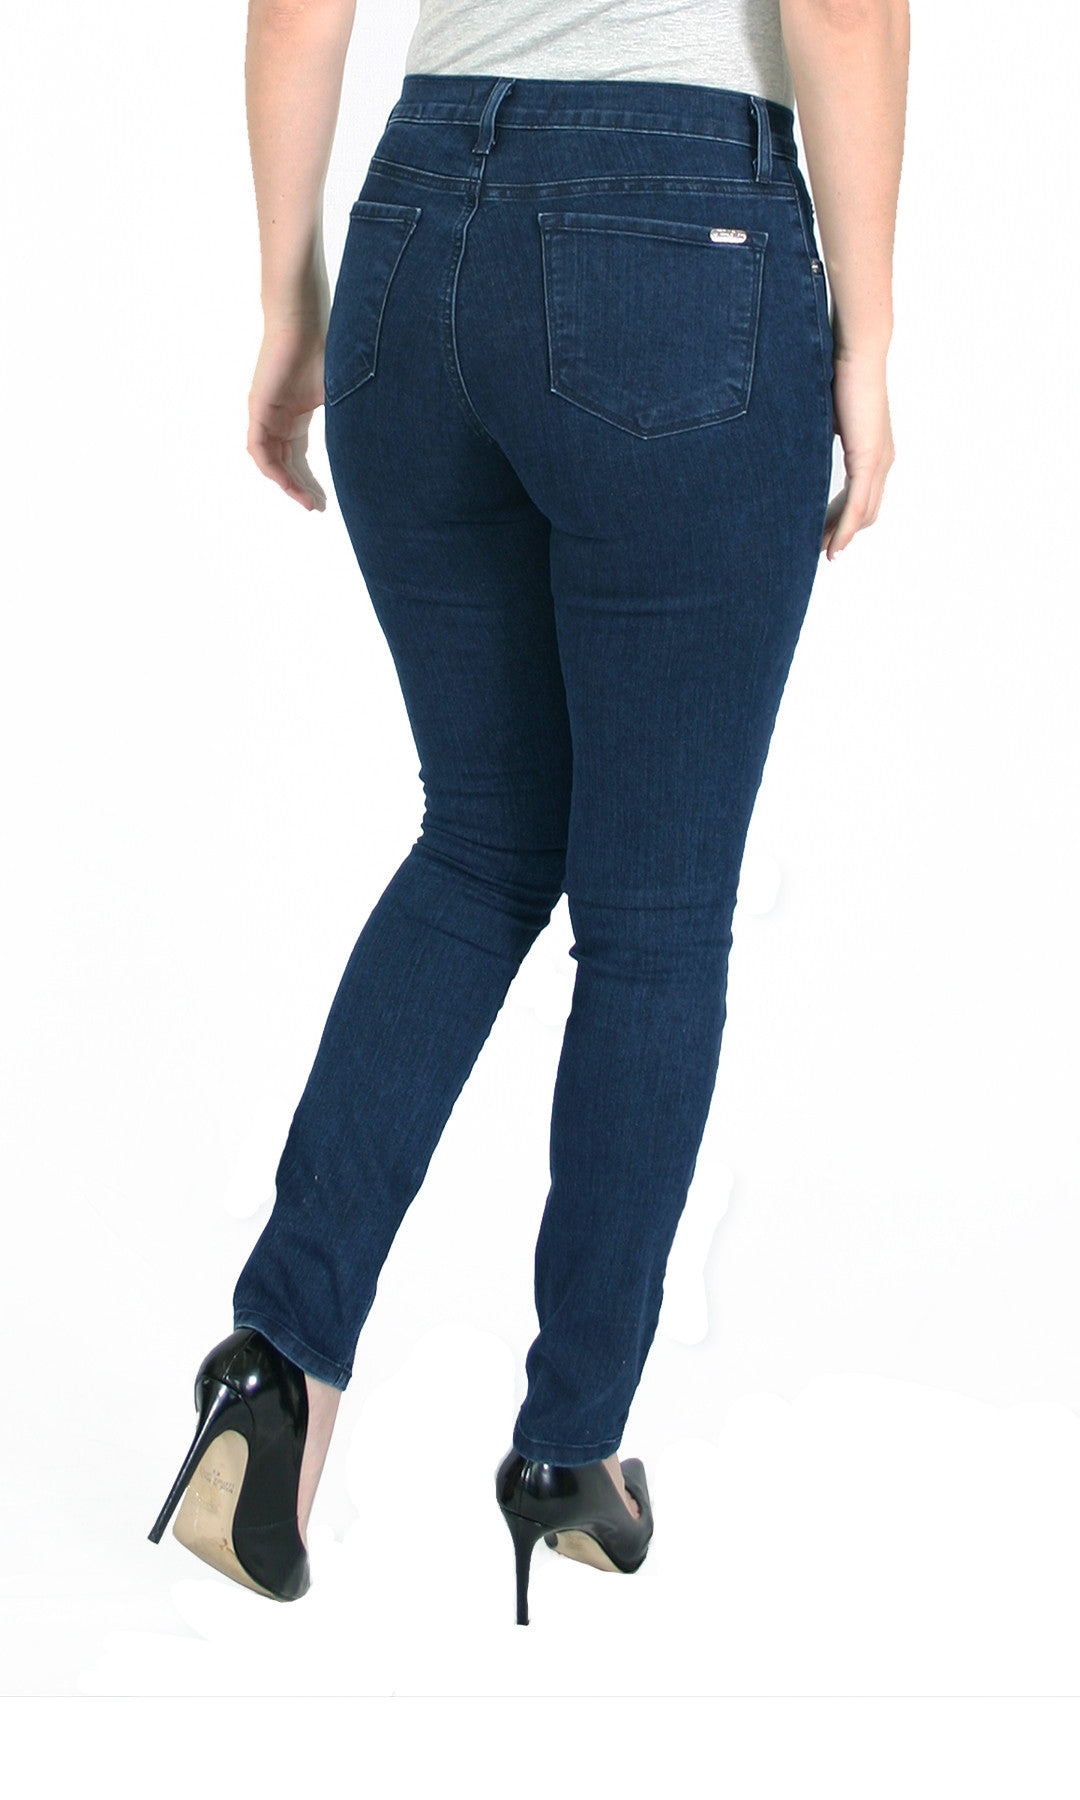 JML Trim N Slim Jeans: Comfortable Slimming Shapewear Jeggings S/M Blue  Leggings